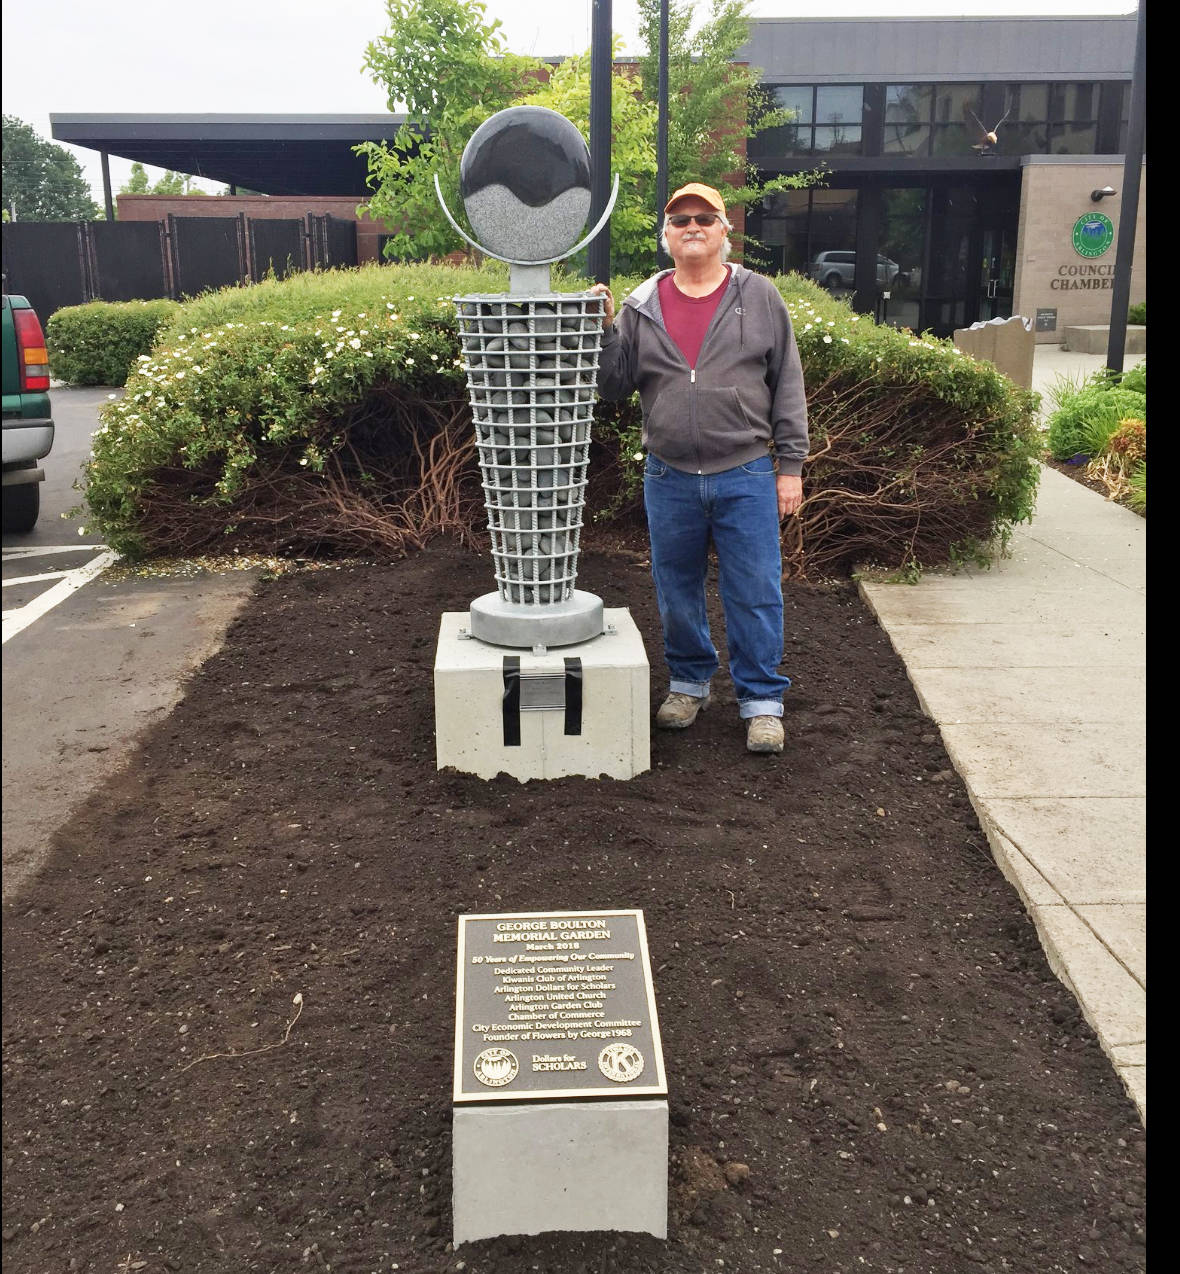 Arts Council honors beloved volunteer Boulton with garden sculpture